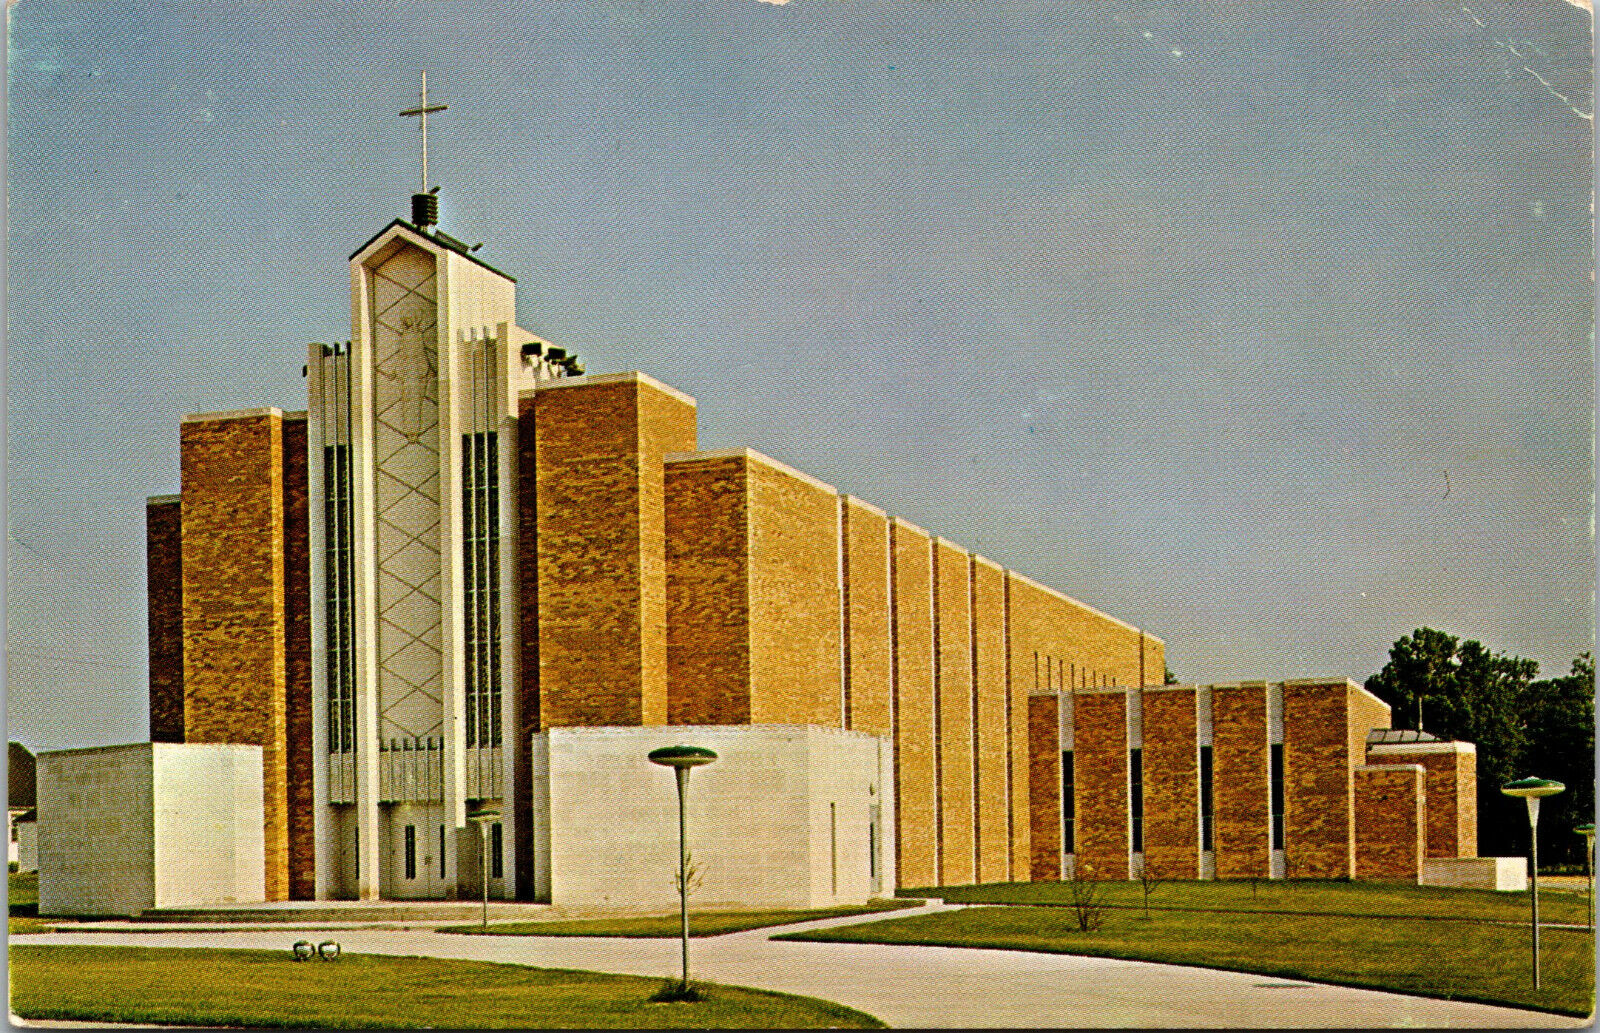 Vtg 1960s Saint Monica Church Garfield Heights Ohio OH Unused Postcard